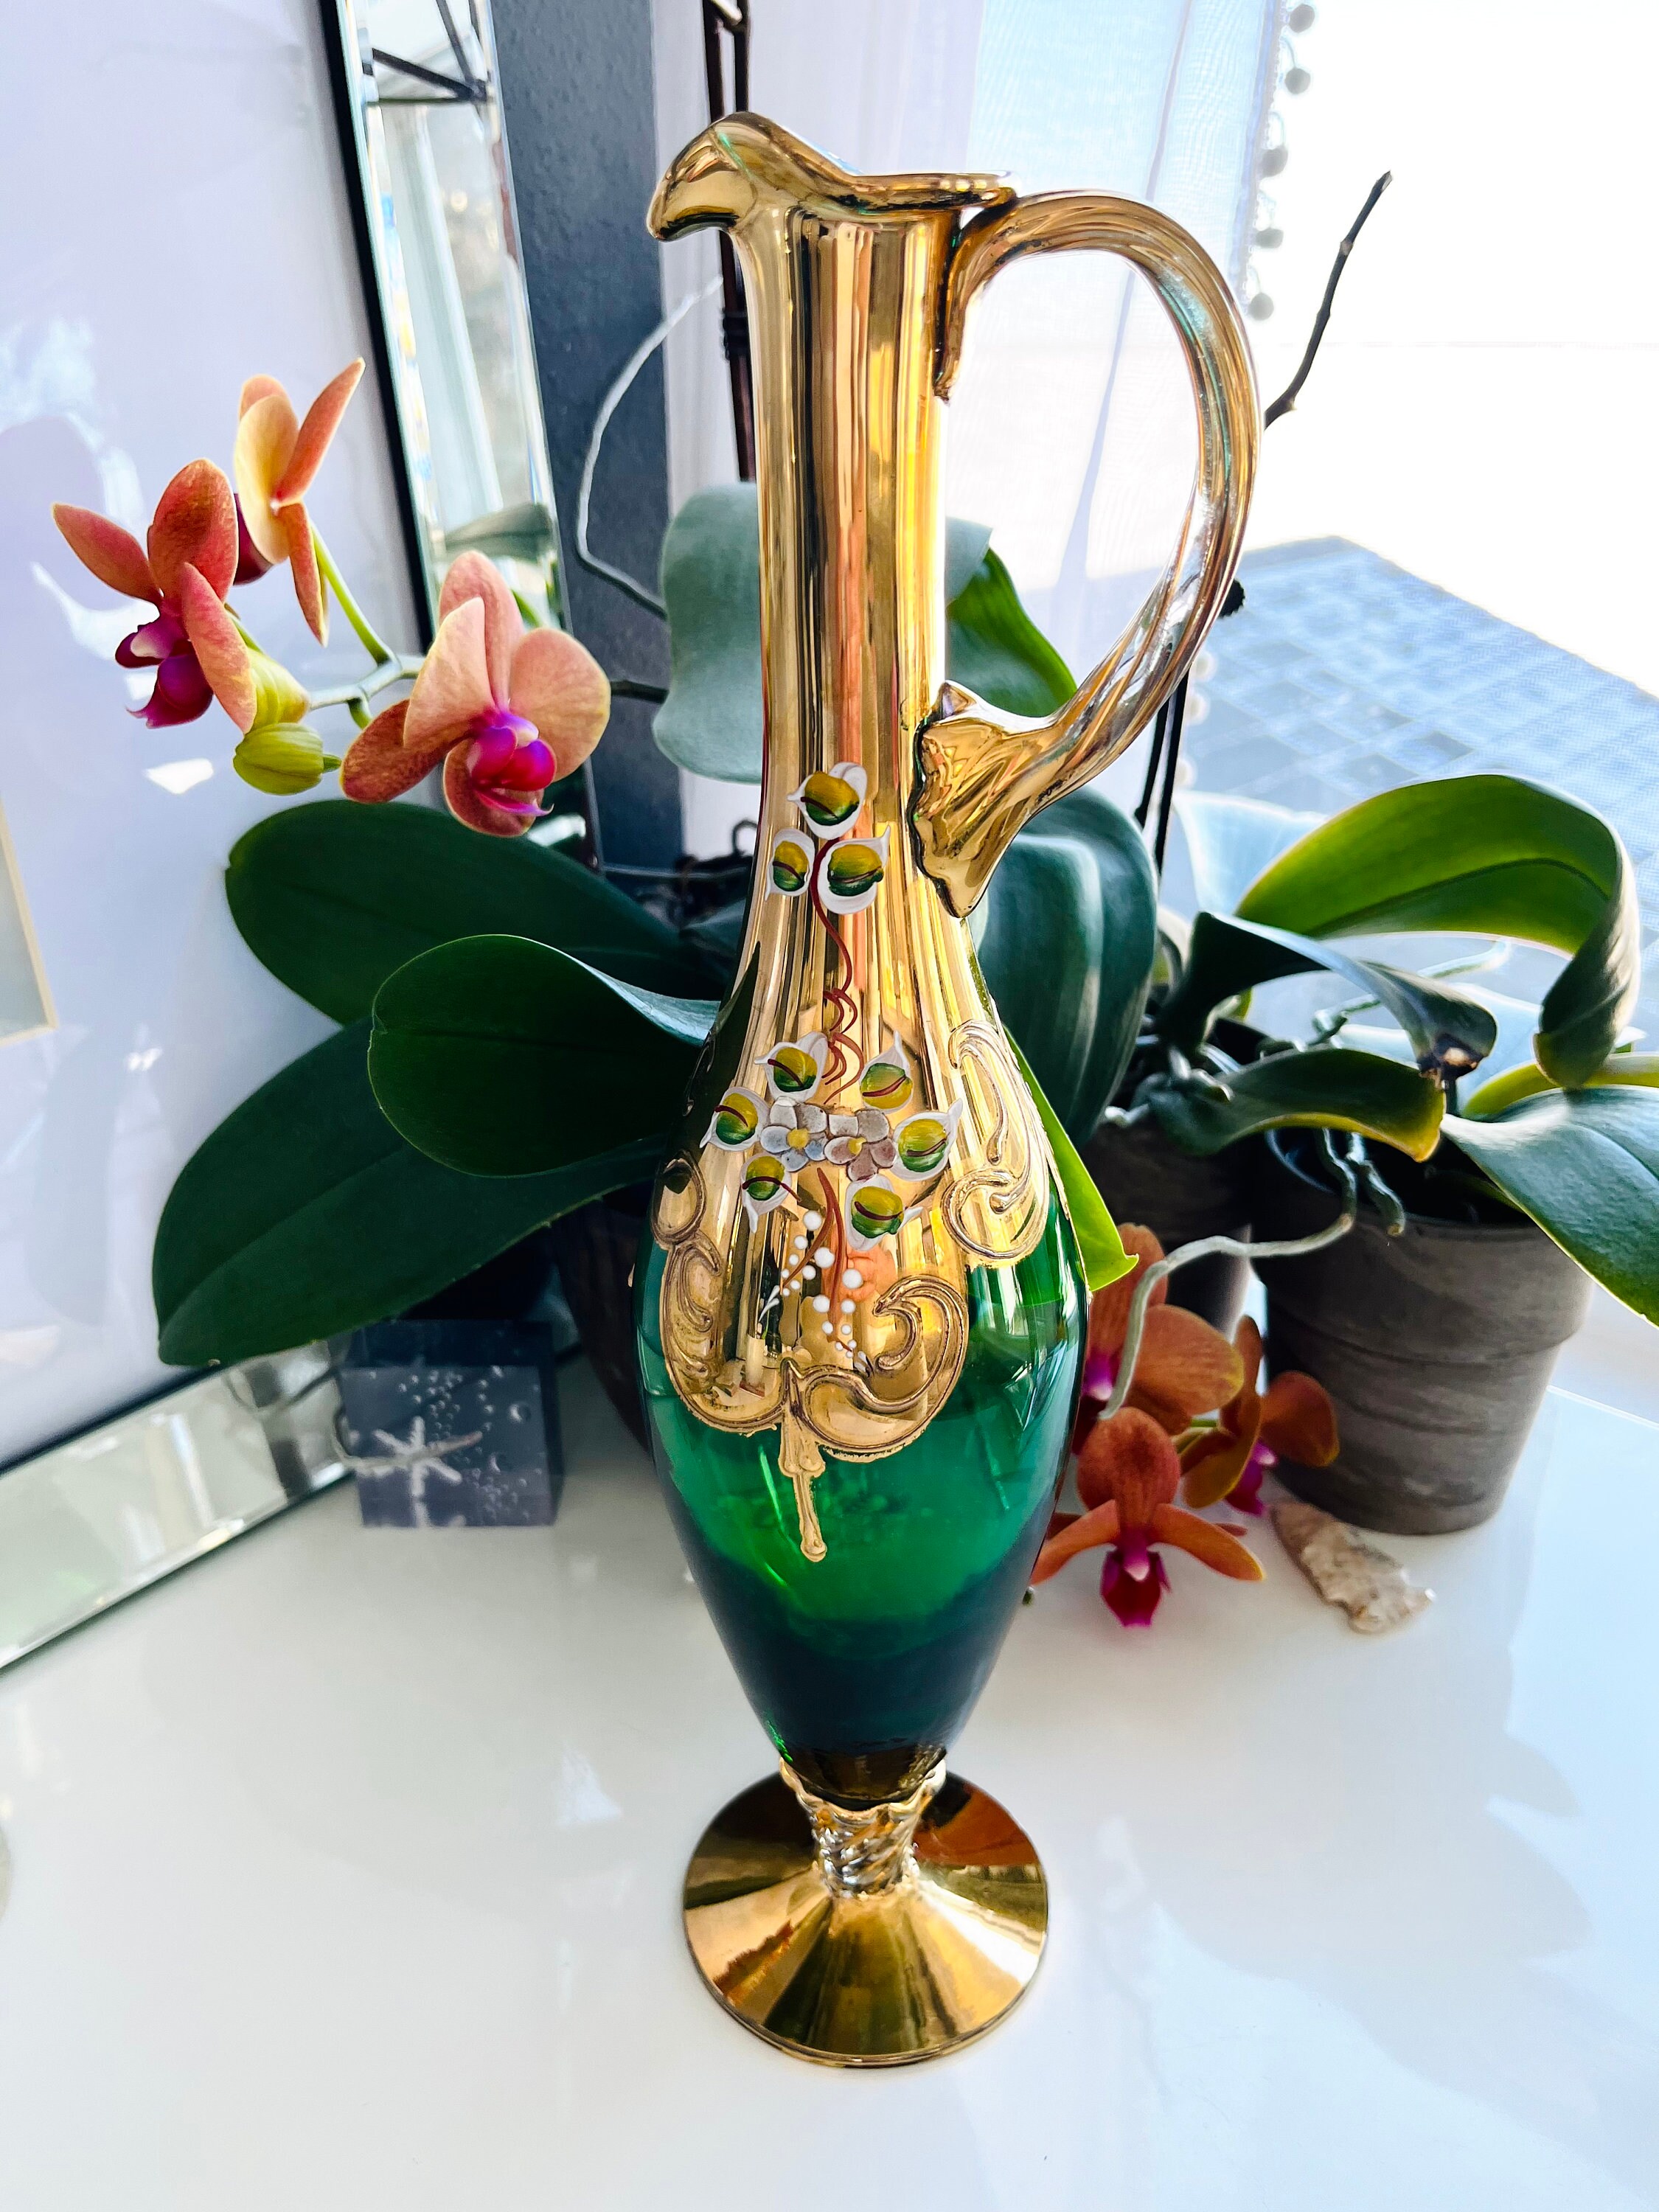 Water Pitcher w 24K Gold Design - World Art Glass - Murano Glass